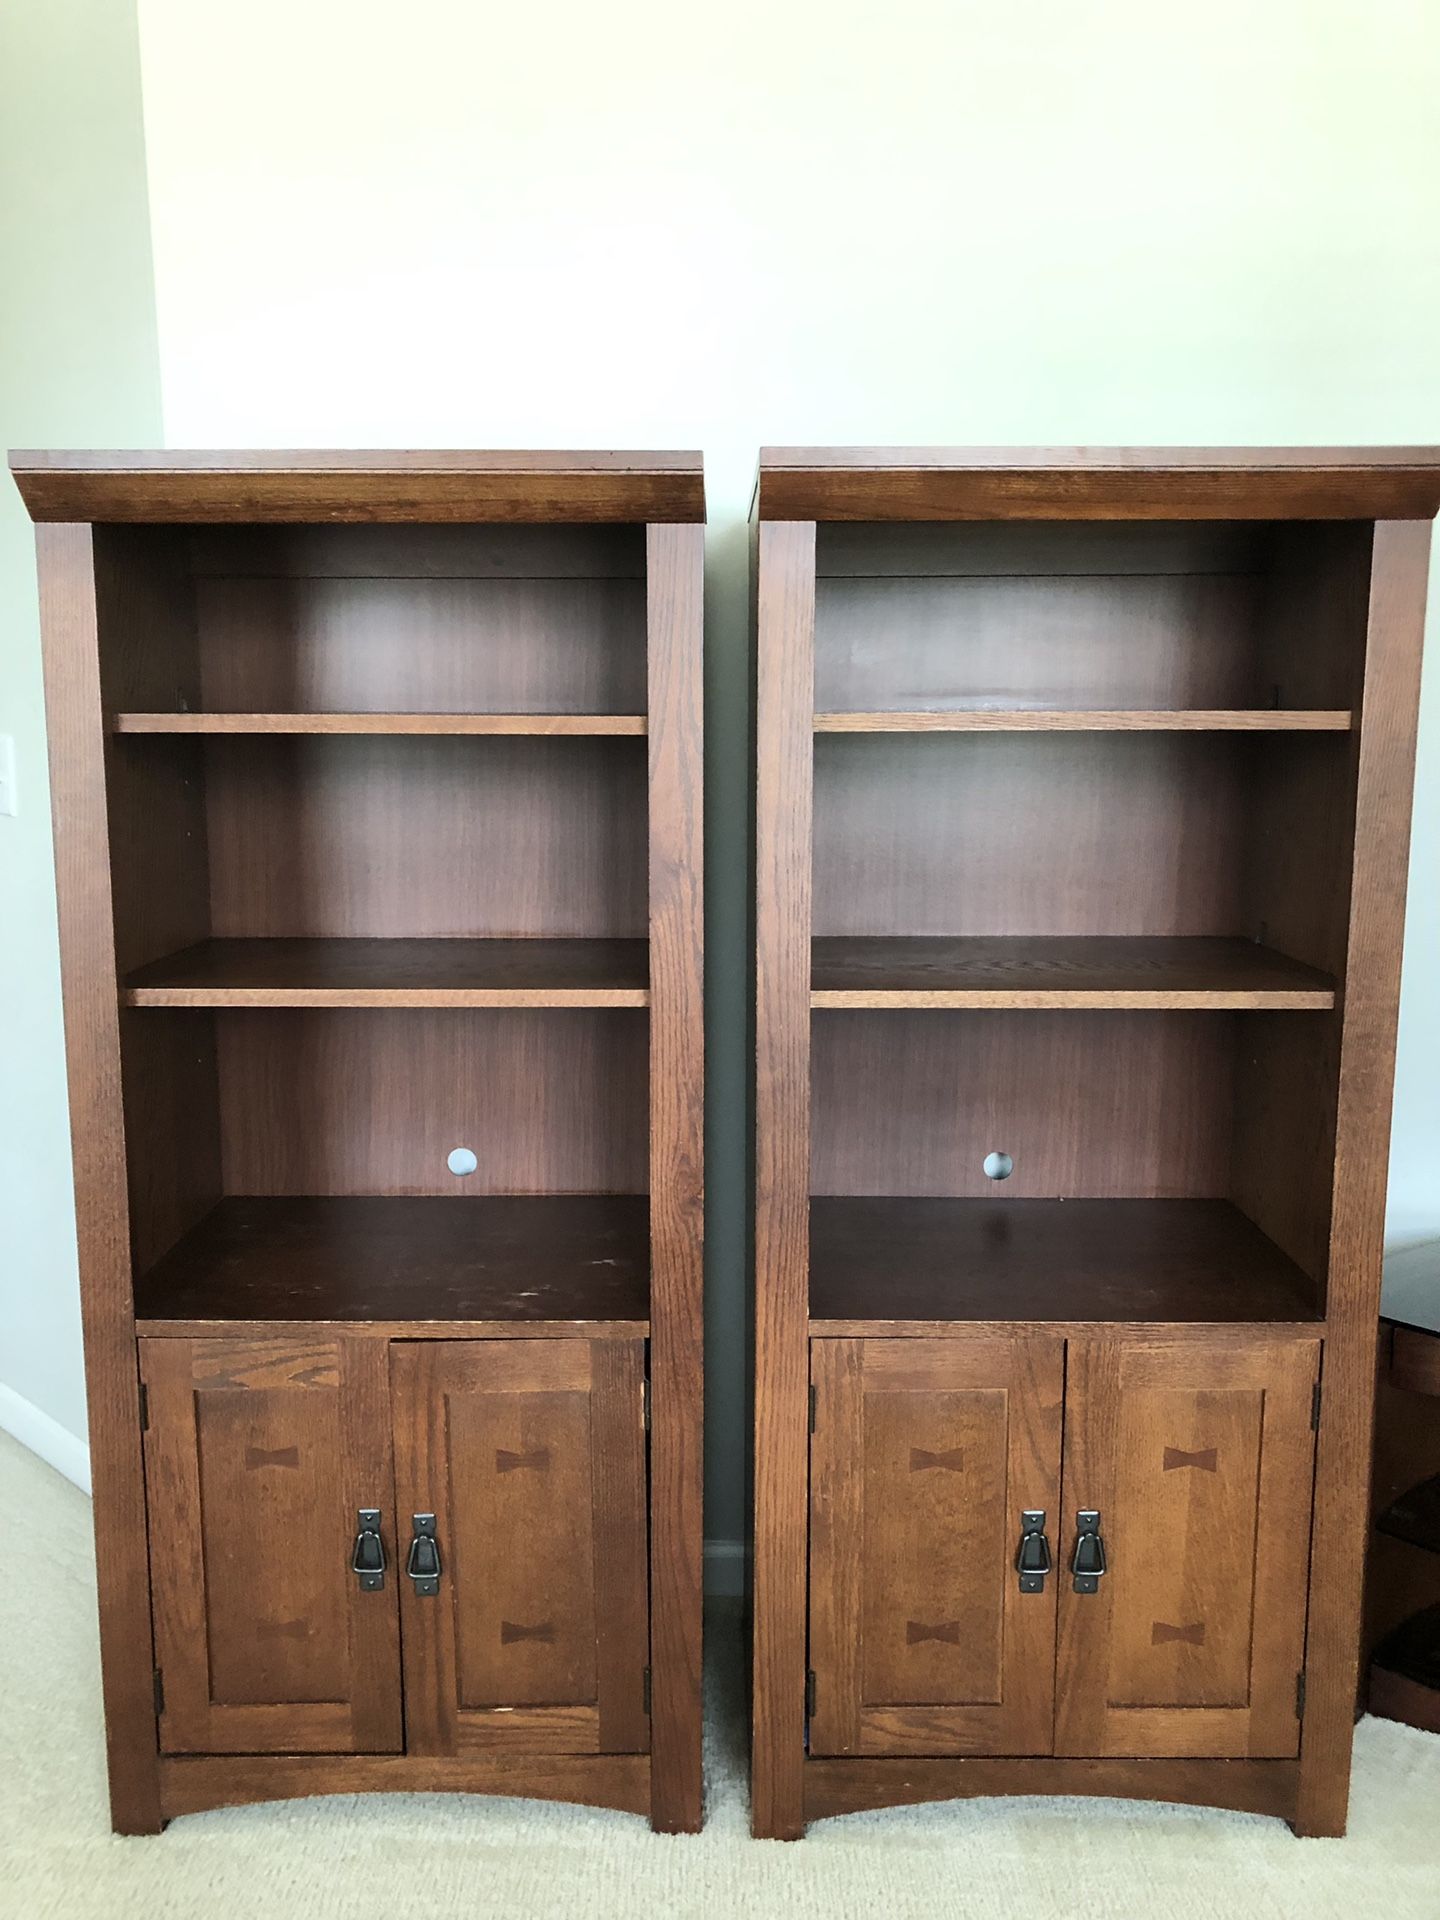 Bookshelves - sturdy - $150